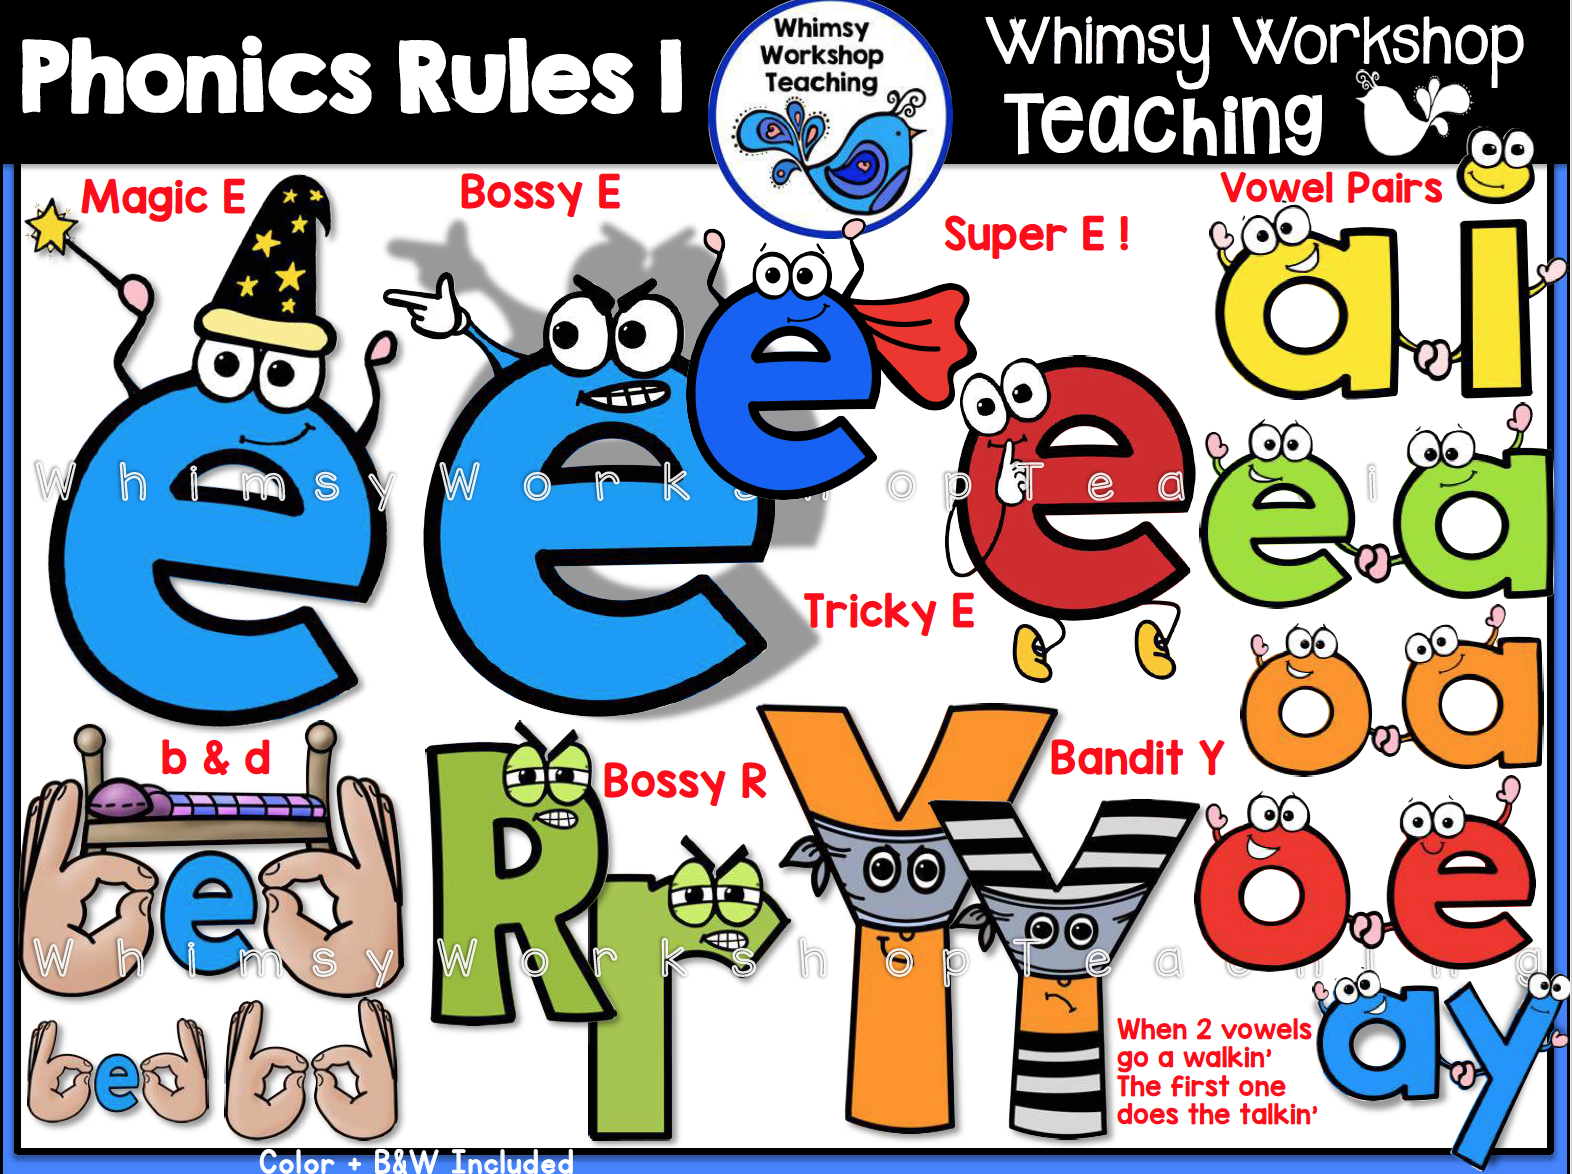 phonics-rules-magic-e-whimsy-workshop-teaching